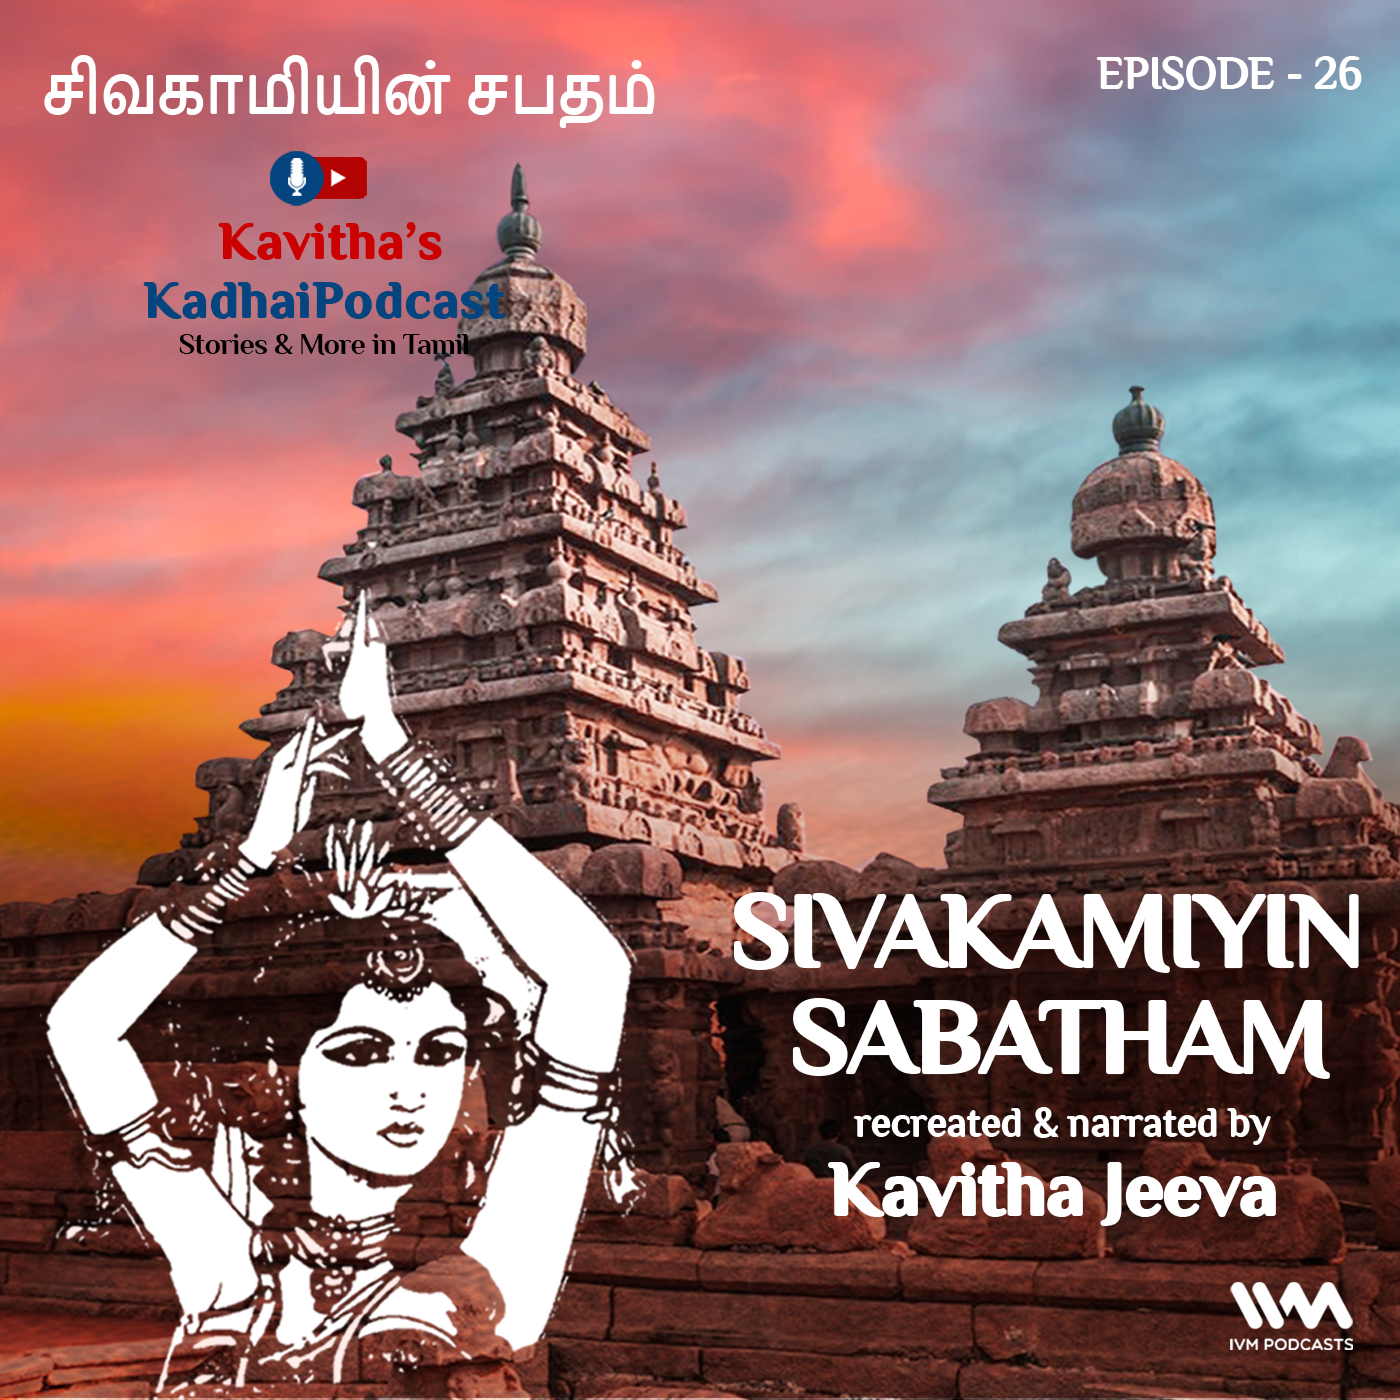 KadhaiPodcast's Sivakamiyin Sabatham - Episode # 26